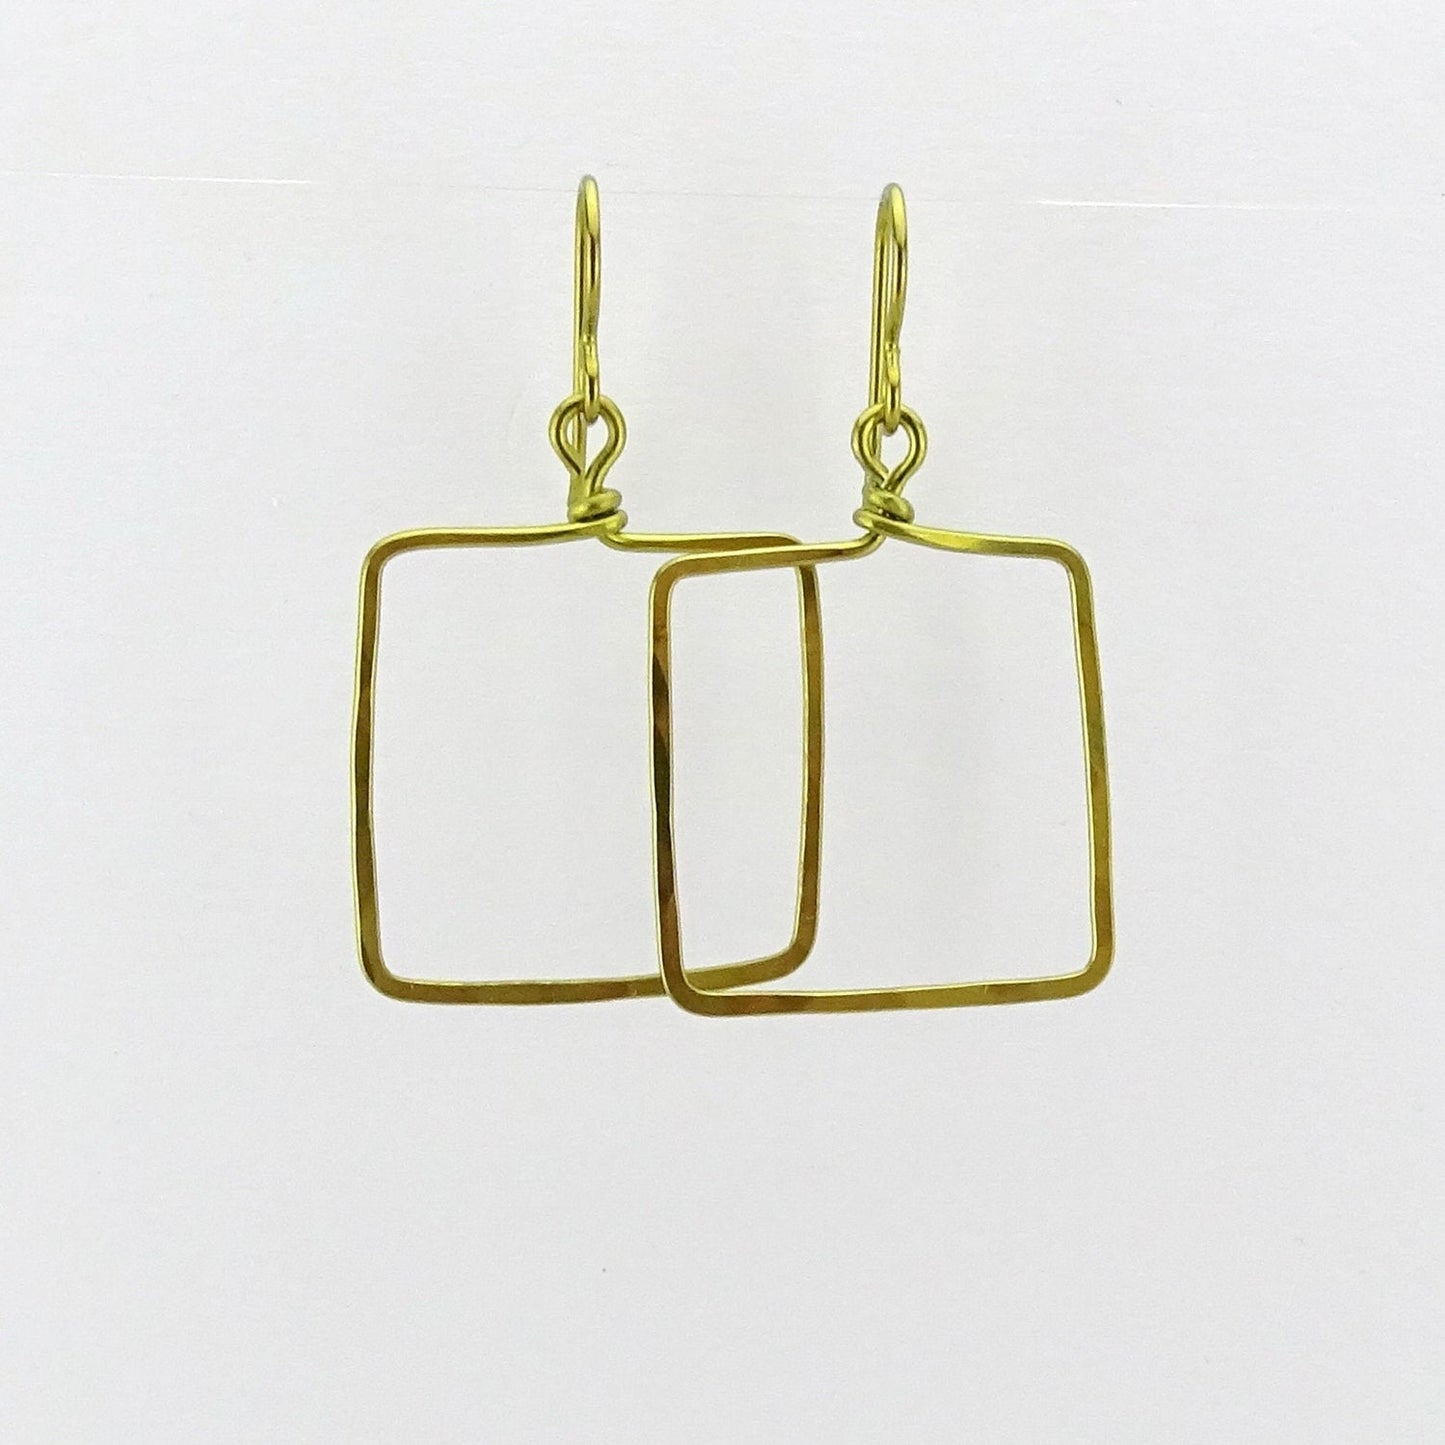 Gold Niobium Square Earrings, Hammered Gold-color Niobium Window Shaped Earrings for Sensitive Ears, Niobium or Titanium Earings